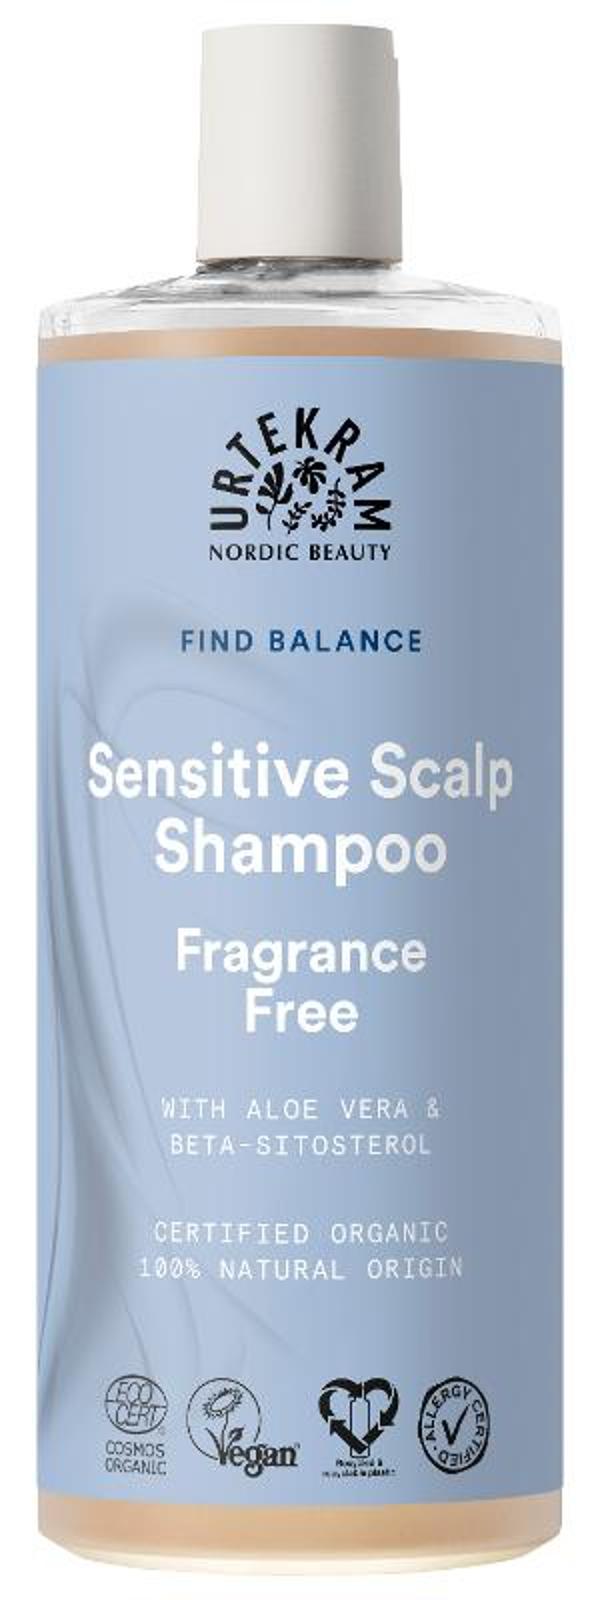 Produktfoto zu Shampoo Fragrance Free 500ml